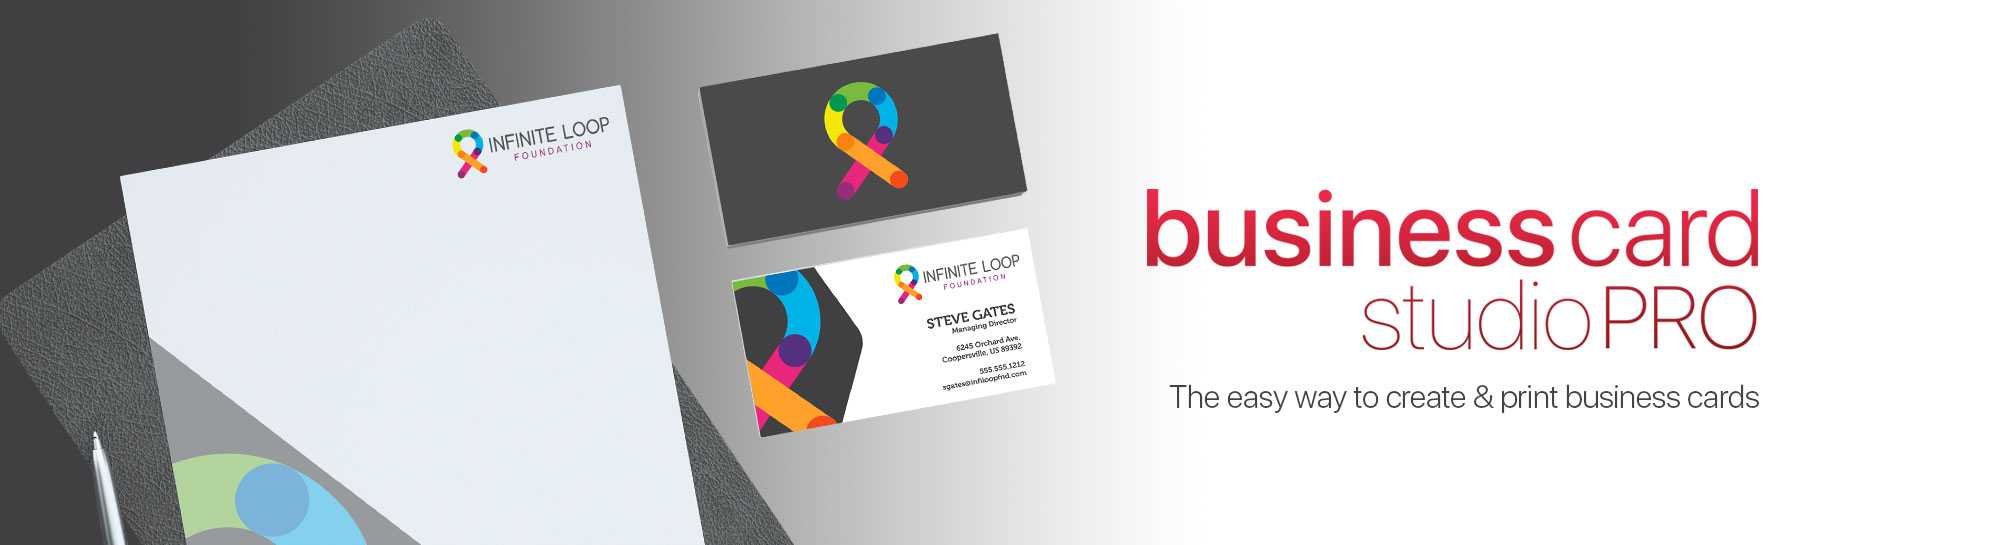 Business Card Studio Pro Softwaresummitsoft Throughout Kinkos Business Card Template